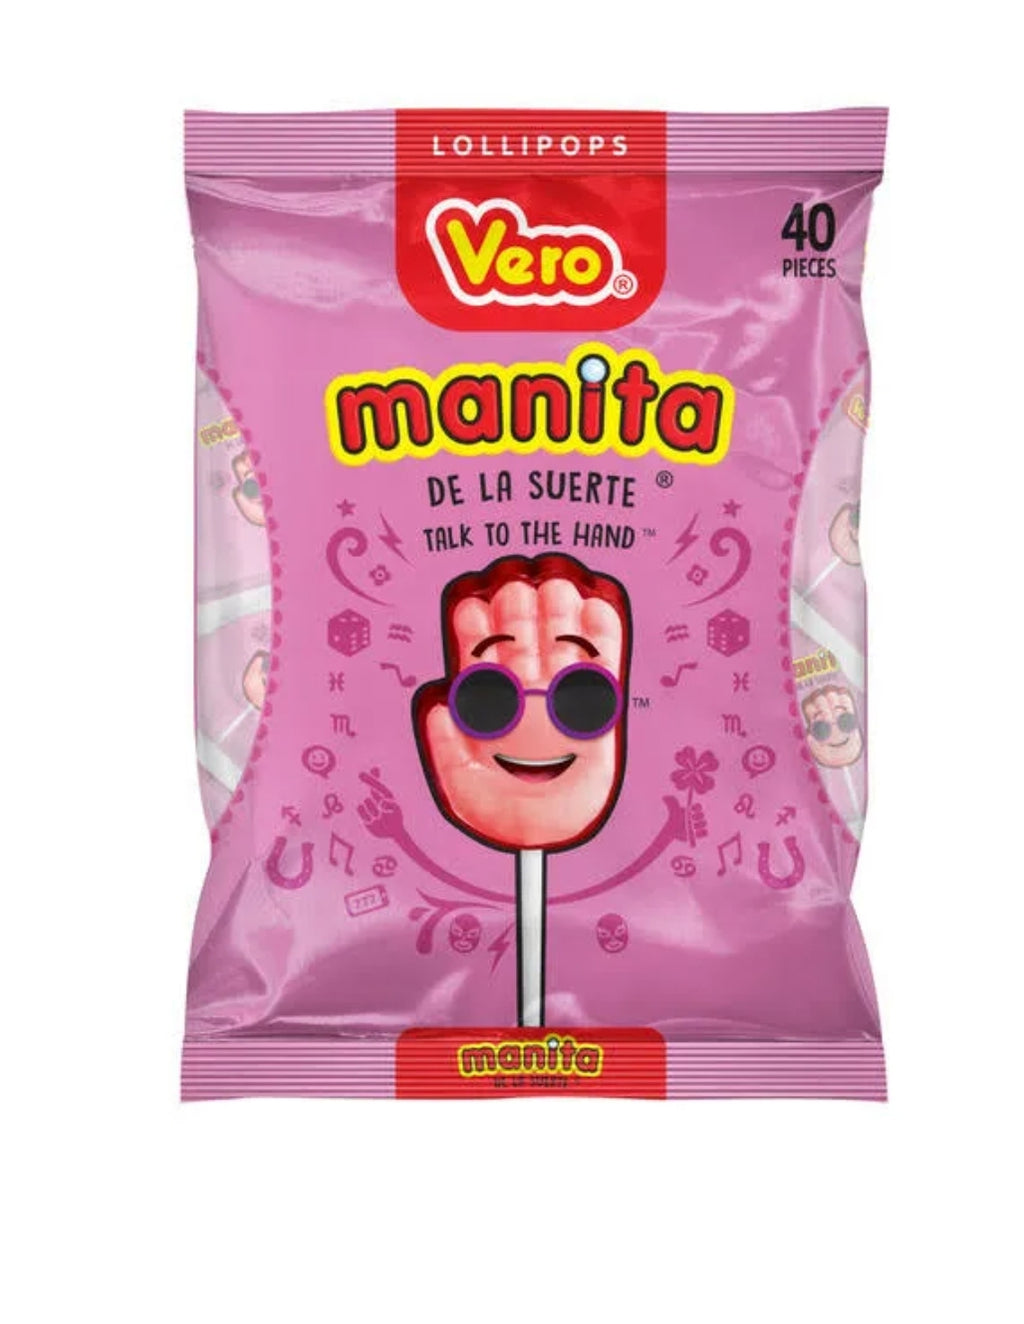 Vero Manita De La Suerte Strawberry and Cherry Lollipop, Artificially Flavored, 23.6 Ounces, 40 Count Bag